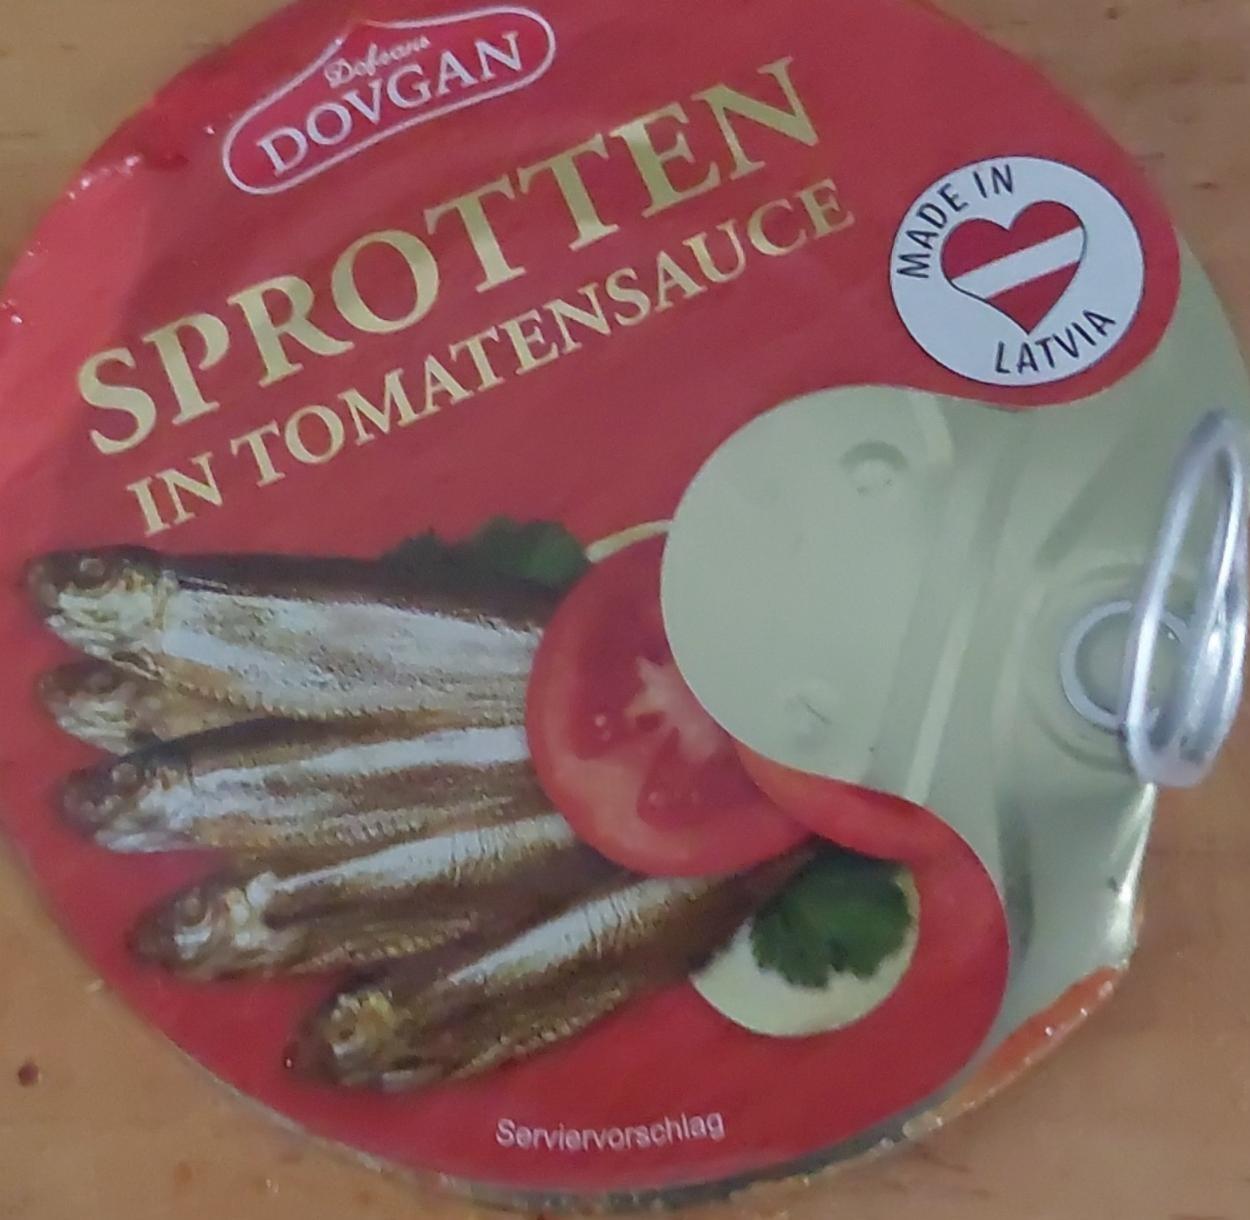 Фото - Шпроты в томатном соусе Sprotten In Tomatensauce Dovgan